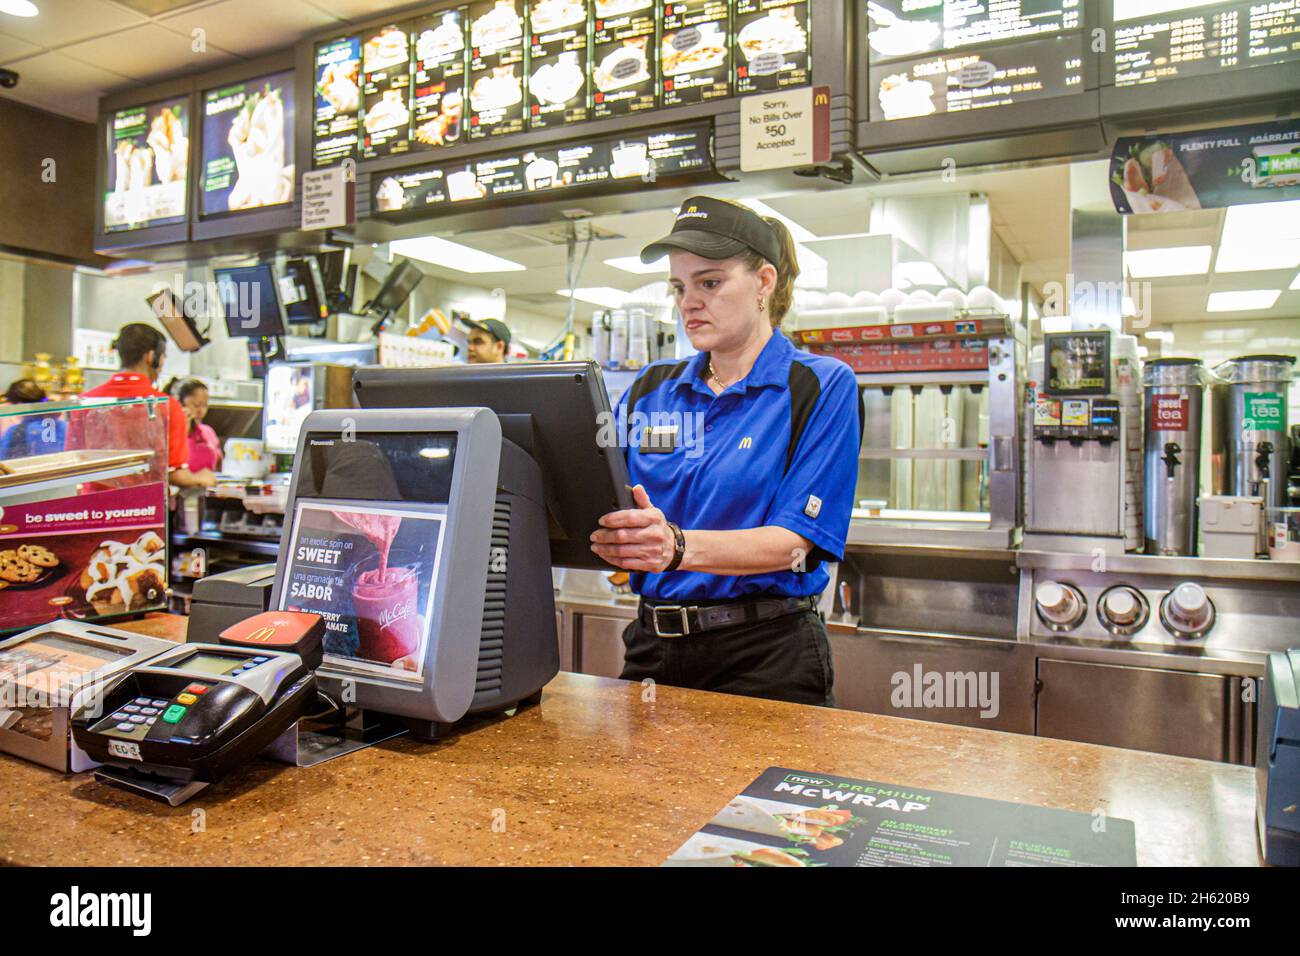 Miami Florida,Homestead,McDonald's fast food restaurant interior inside,counter employee worker working Hispanic woman female cashier Stock Photo